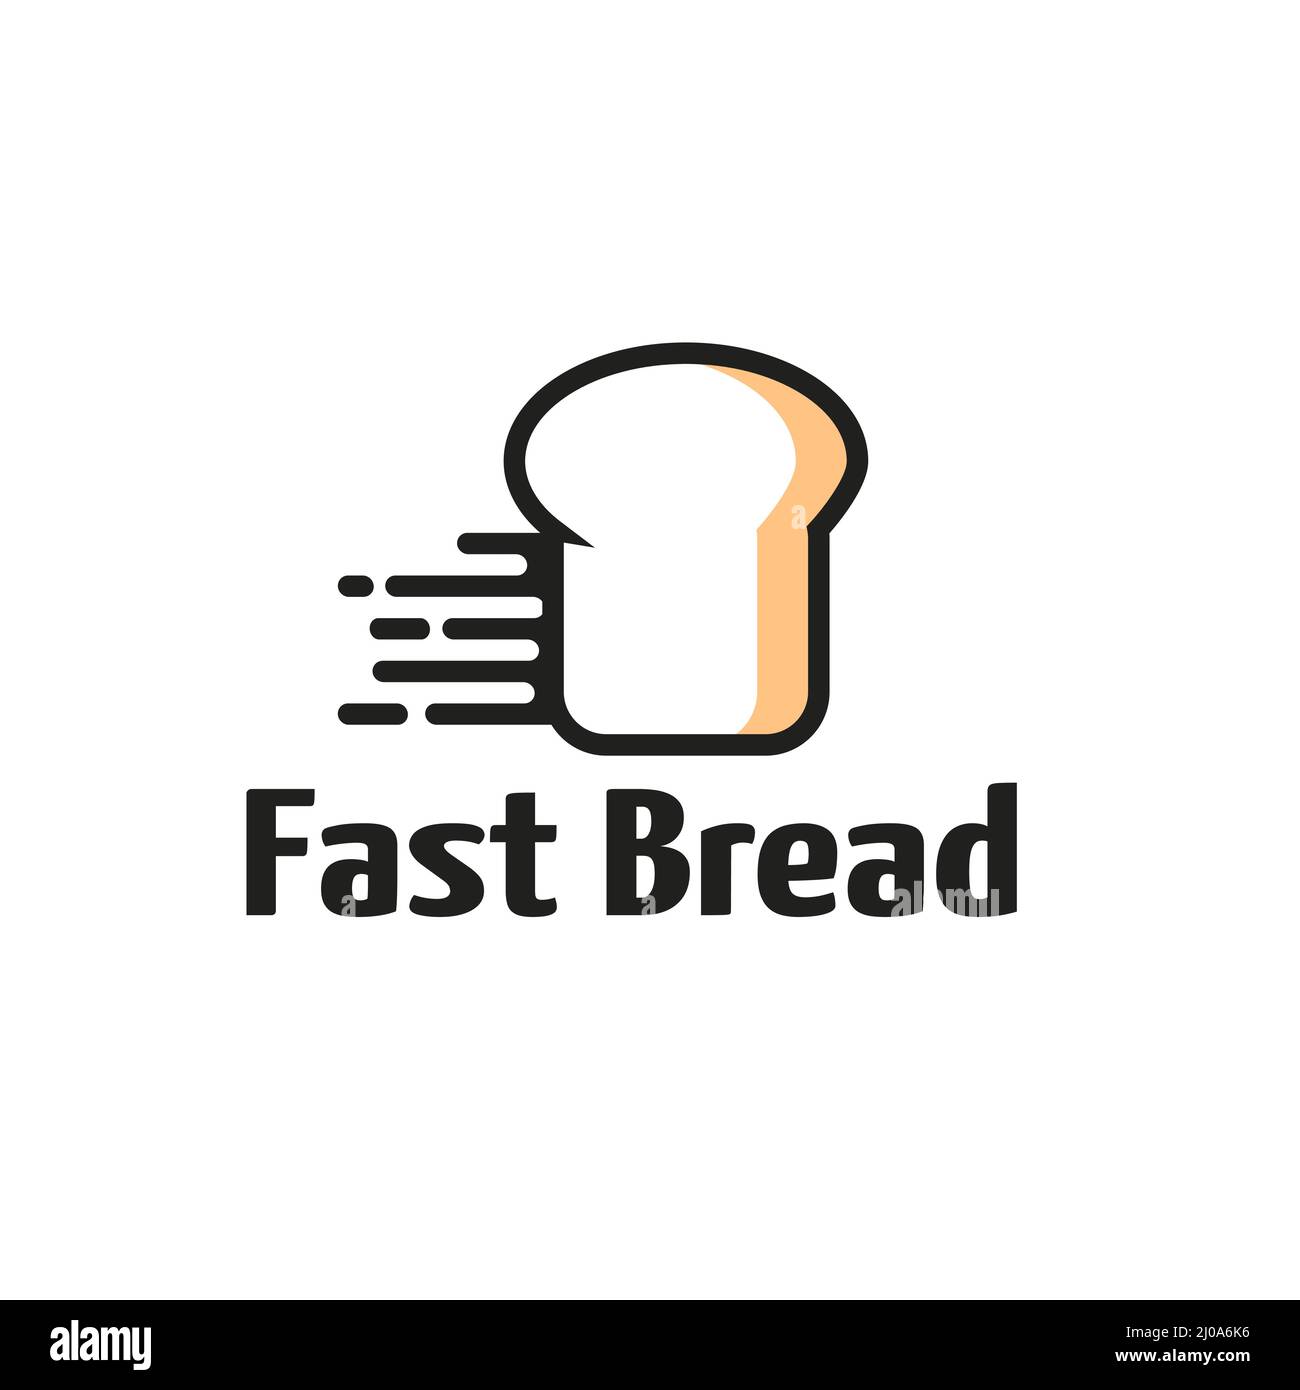 Simple Fast Bread Icon design logo Cake logo Template Illustration de Vecteur